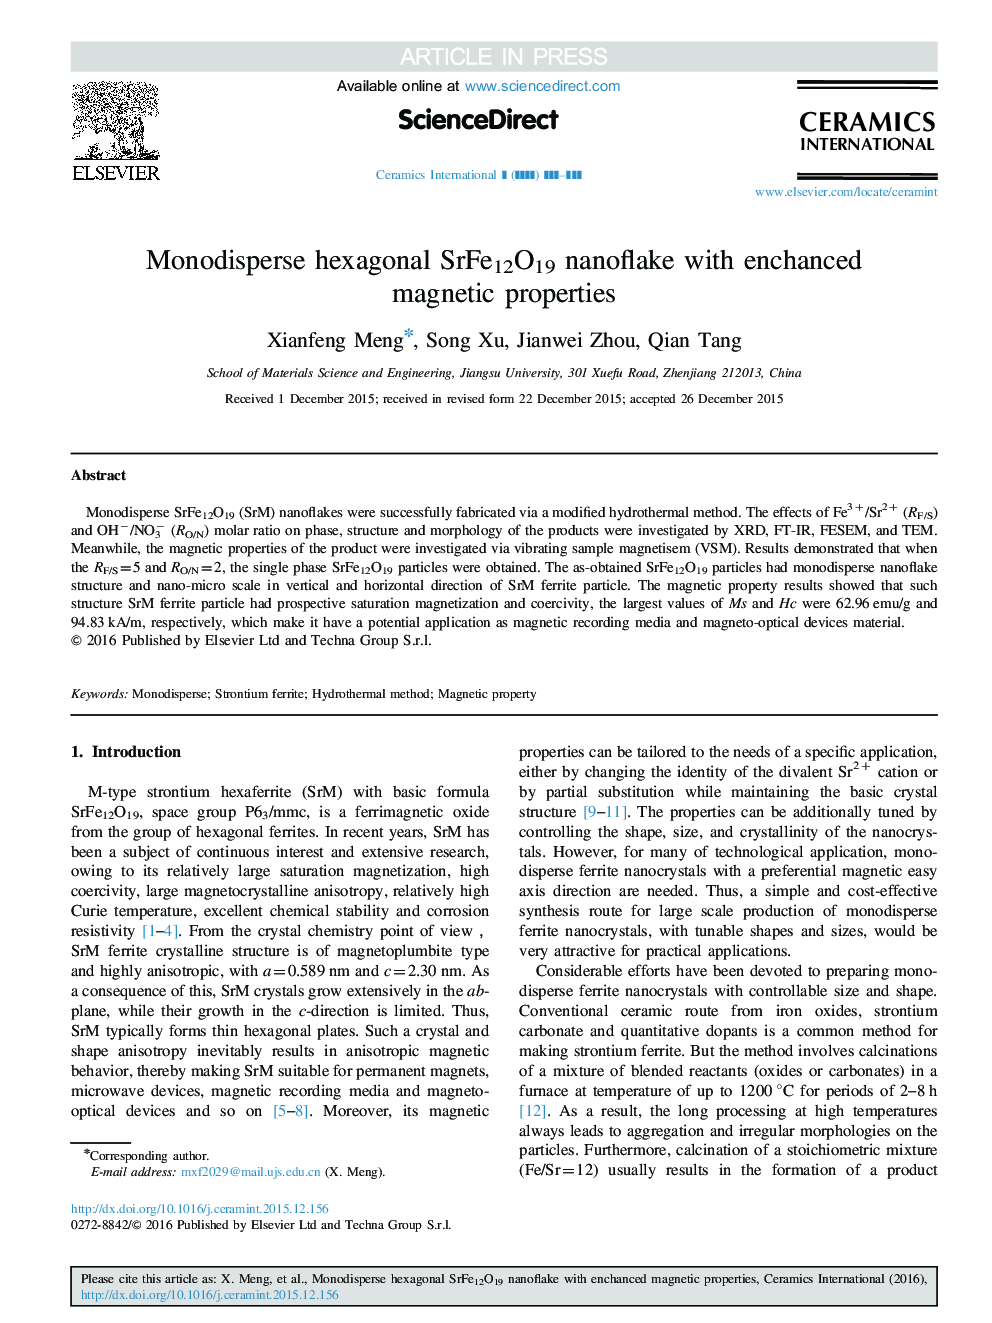 Monodisperse hexagonal SrFe12O19 nanoflake with enchanced magnetic properties